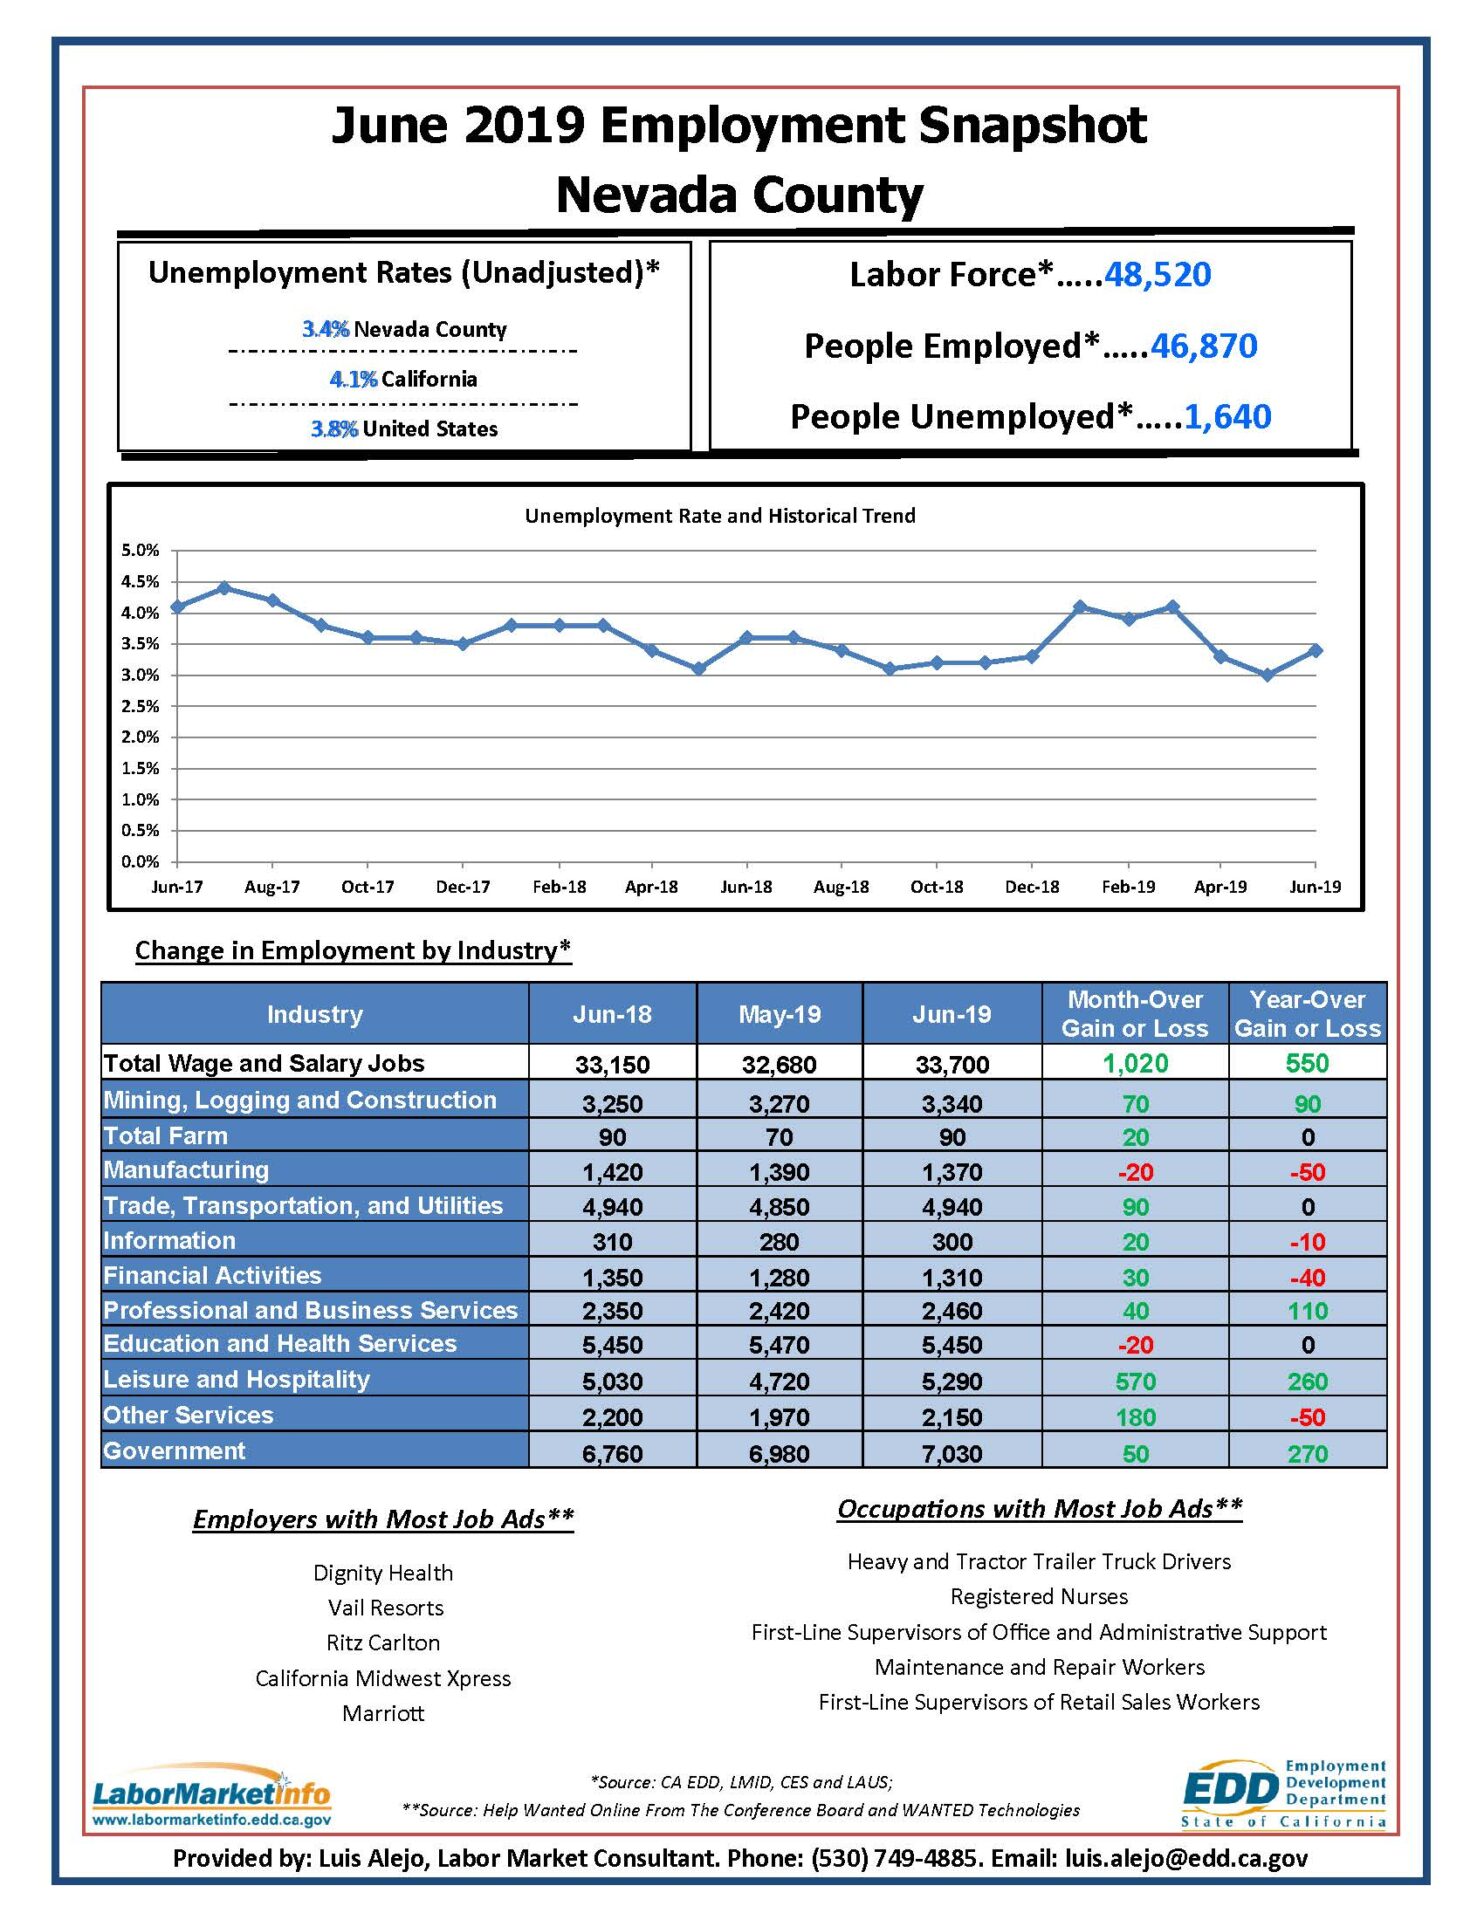 Nevada County Employment Snapshot June 2019 Numbers 1